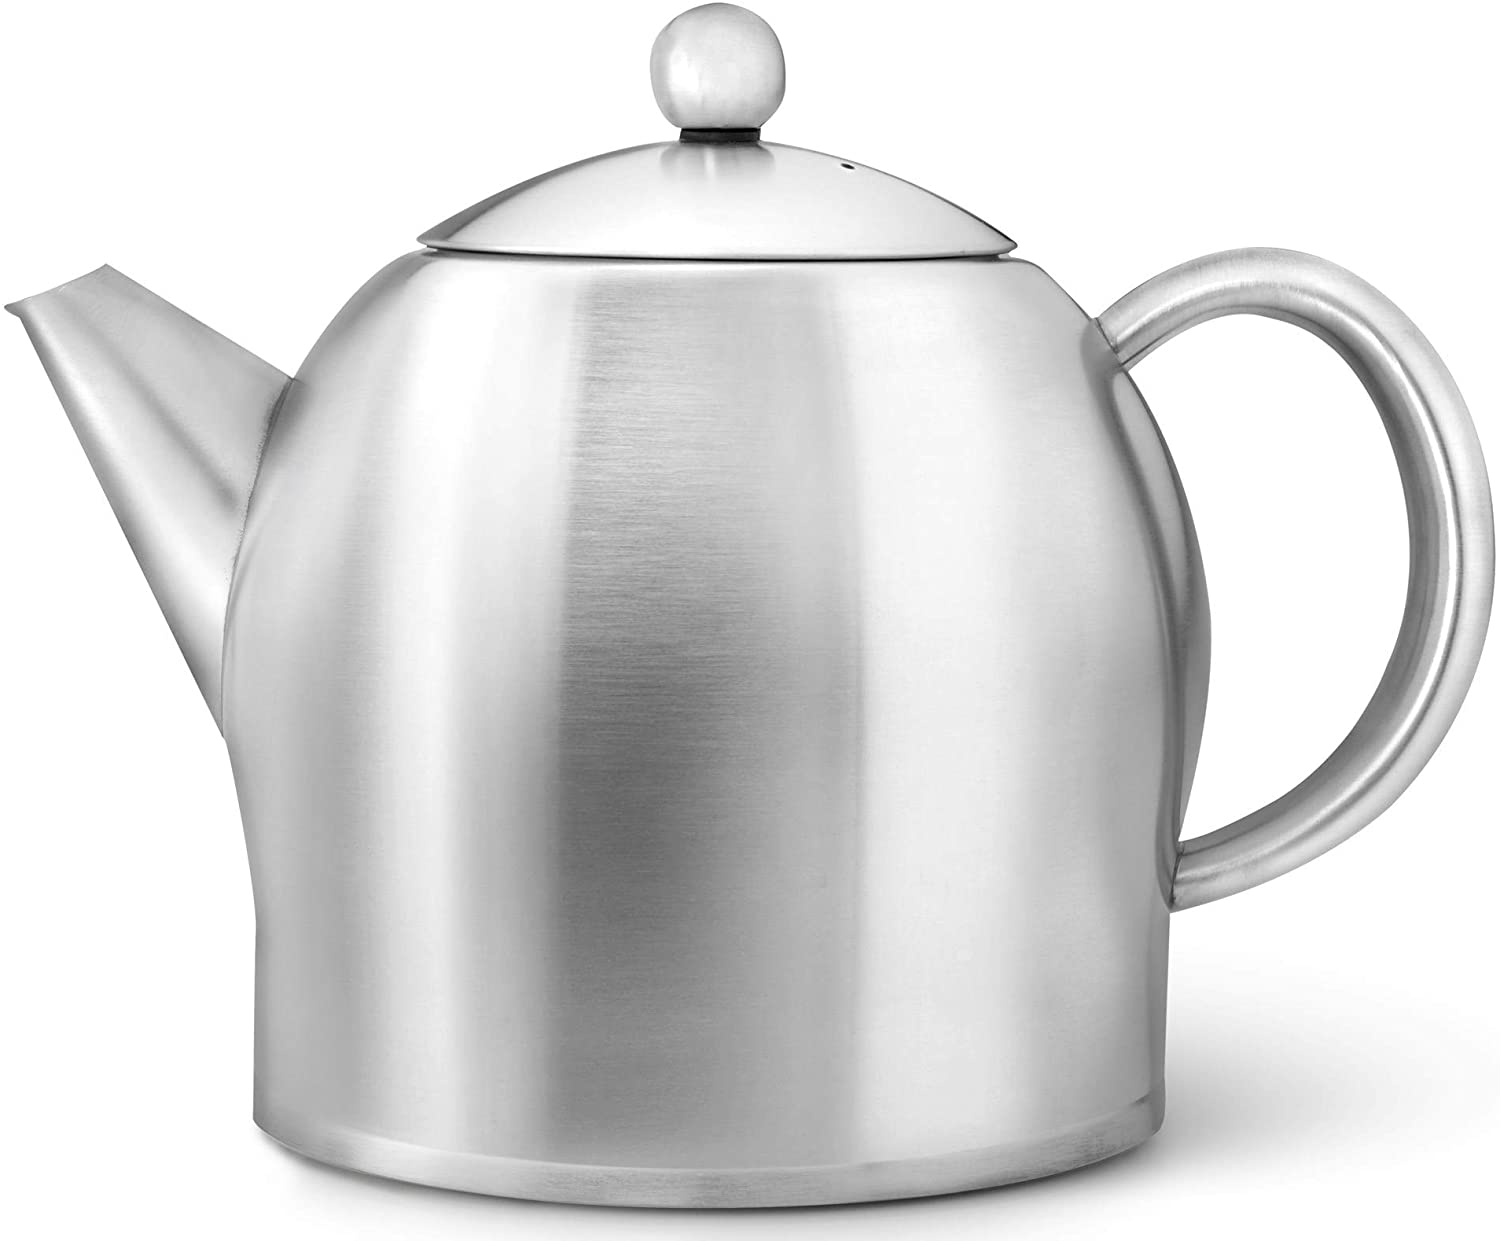 Bredemeijer 1.4 L Stainless Steel Teapot Santhee Satin Finish, Silver